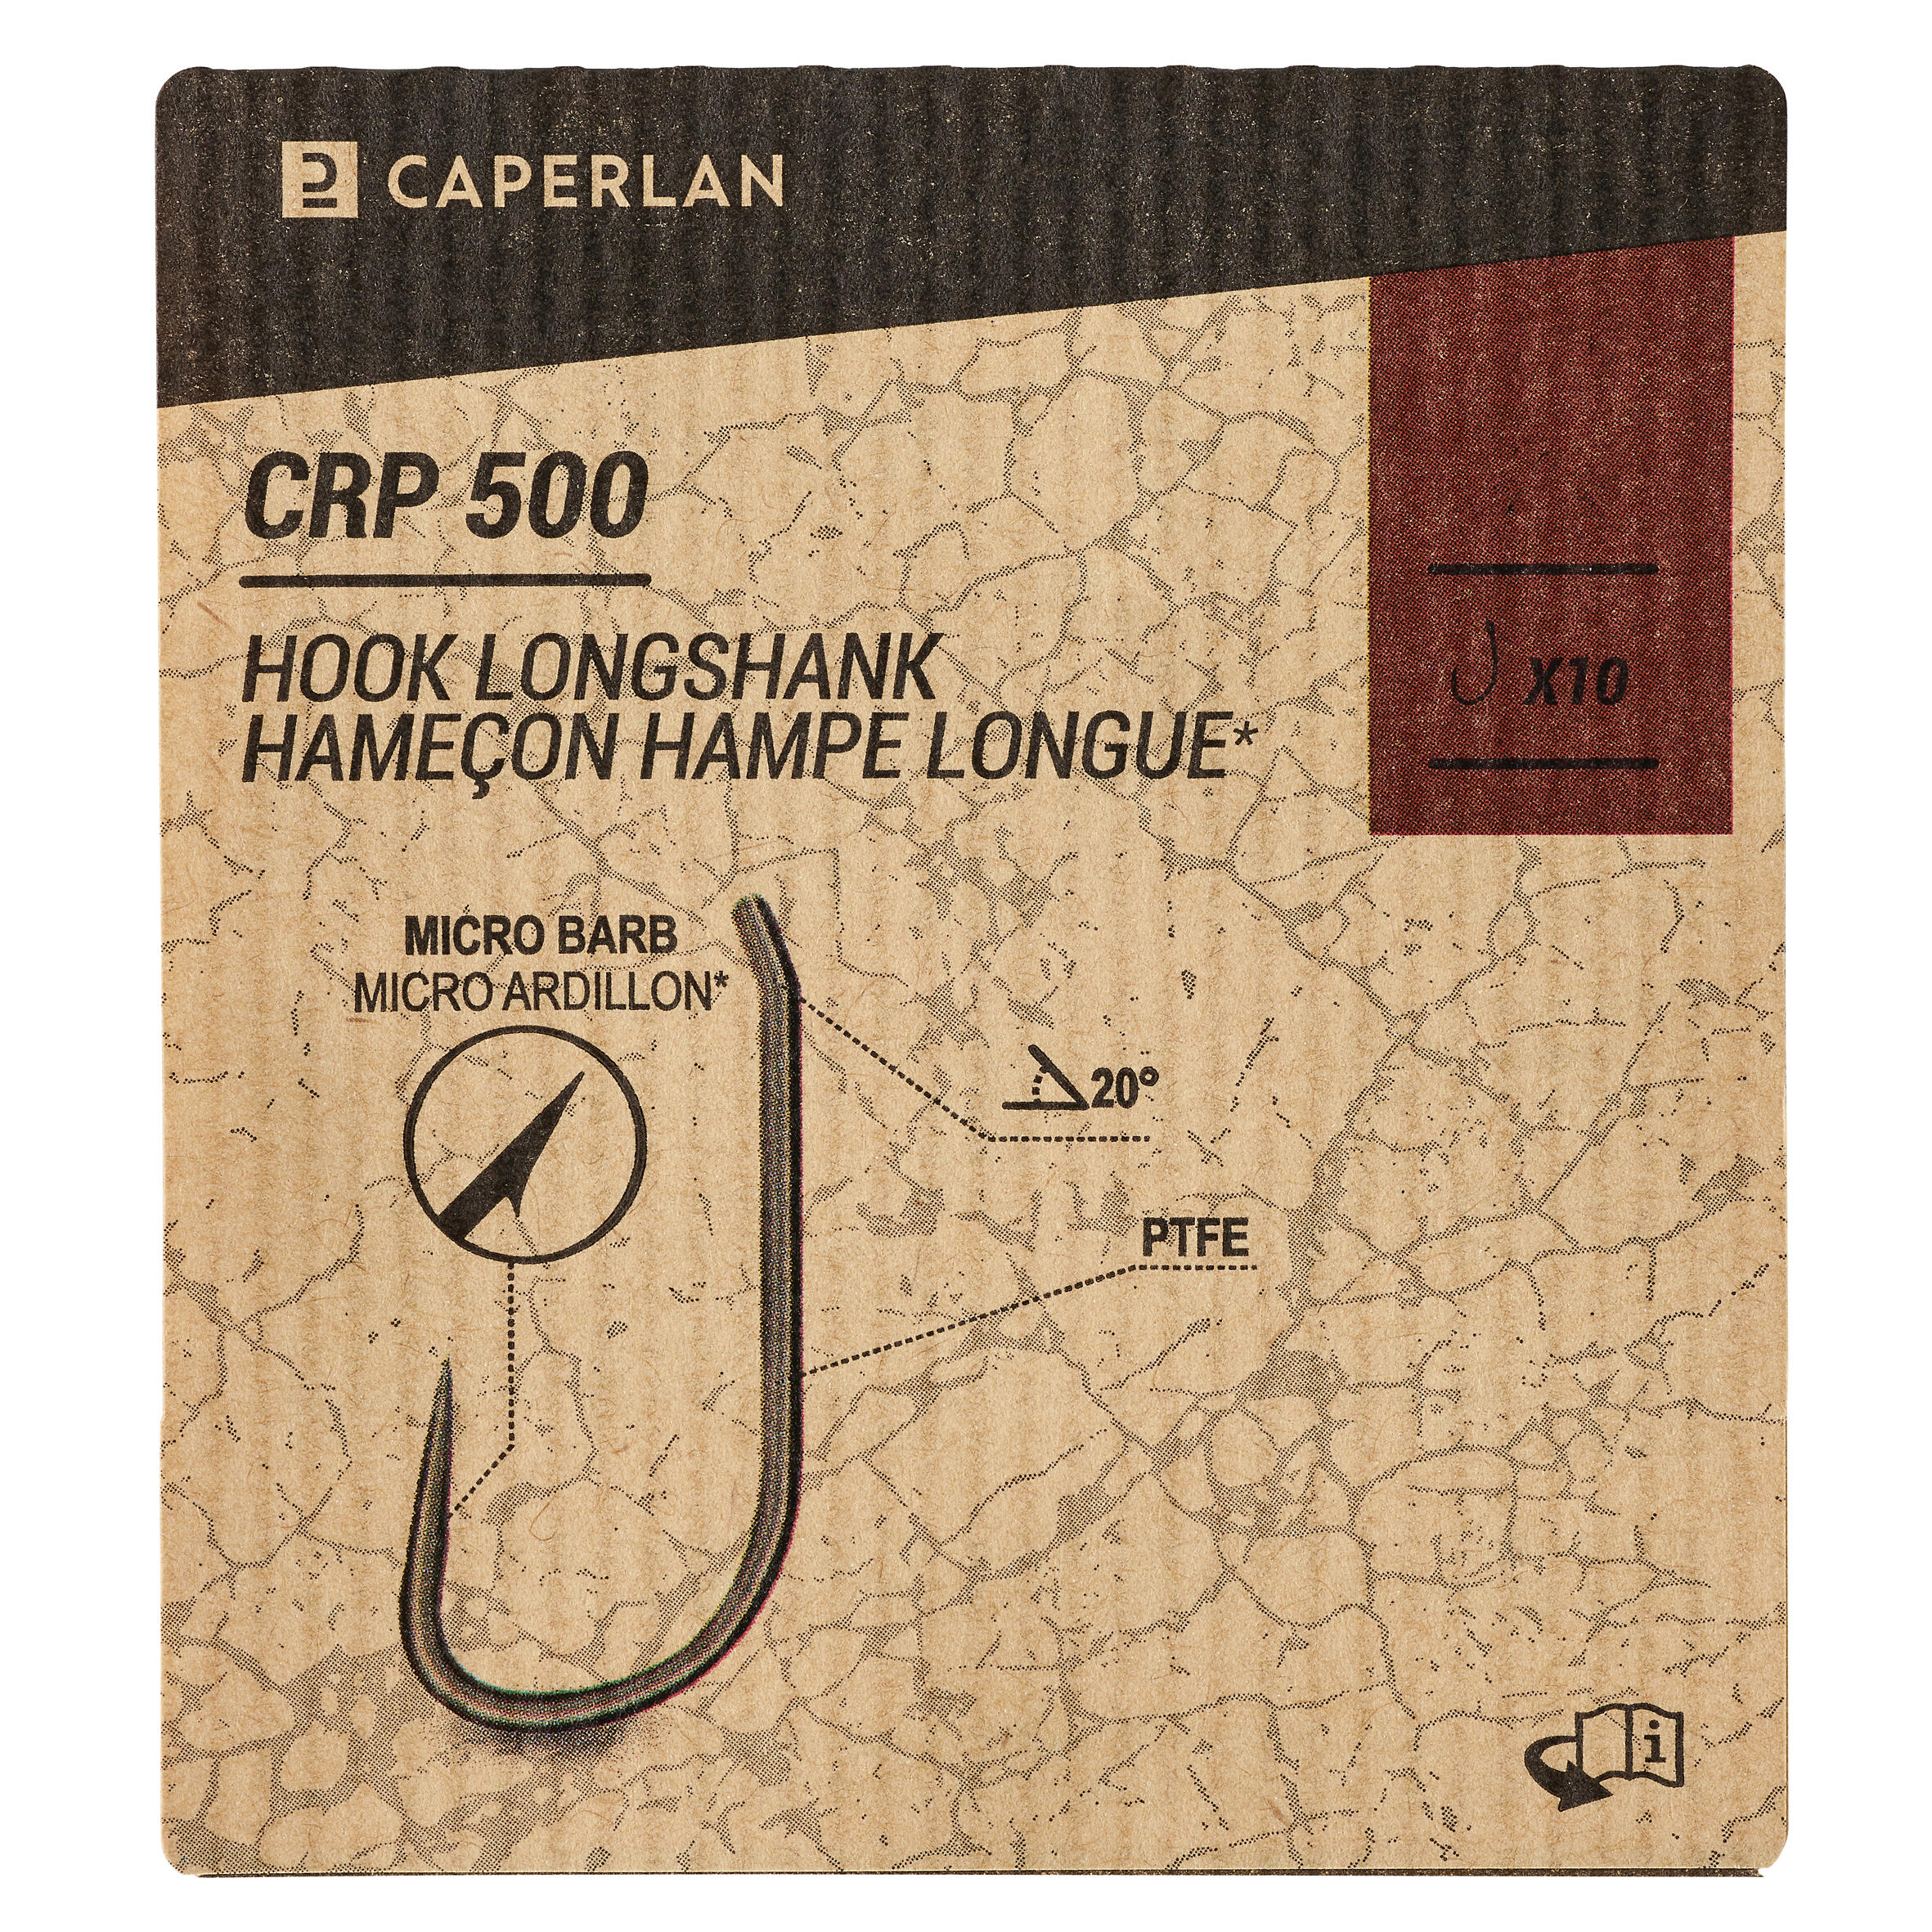 Carp fishing hook - Long Shank 500 3/4